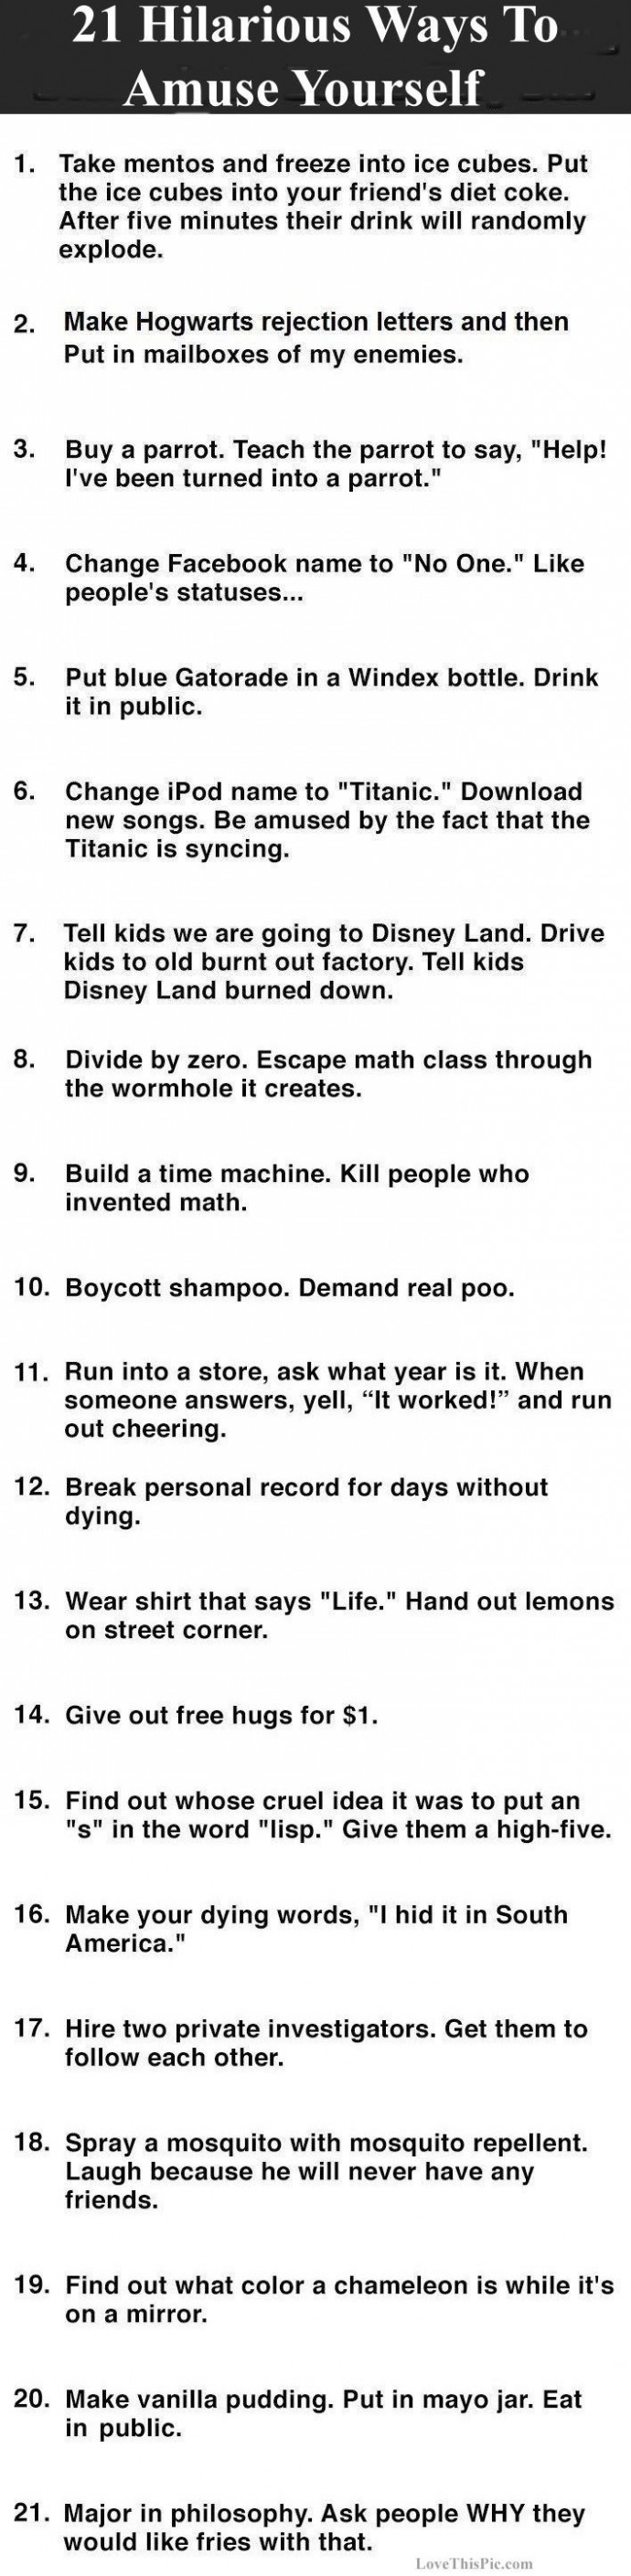 21 hilarious ways to amuse yourself